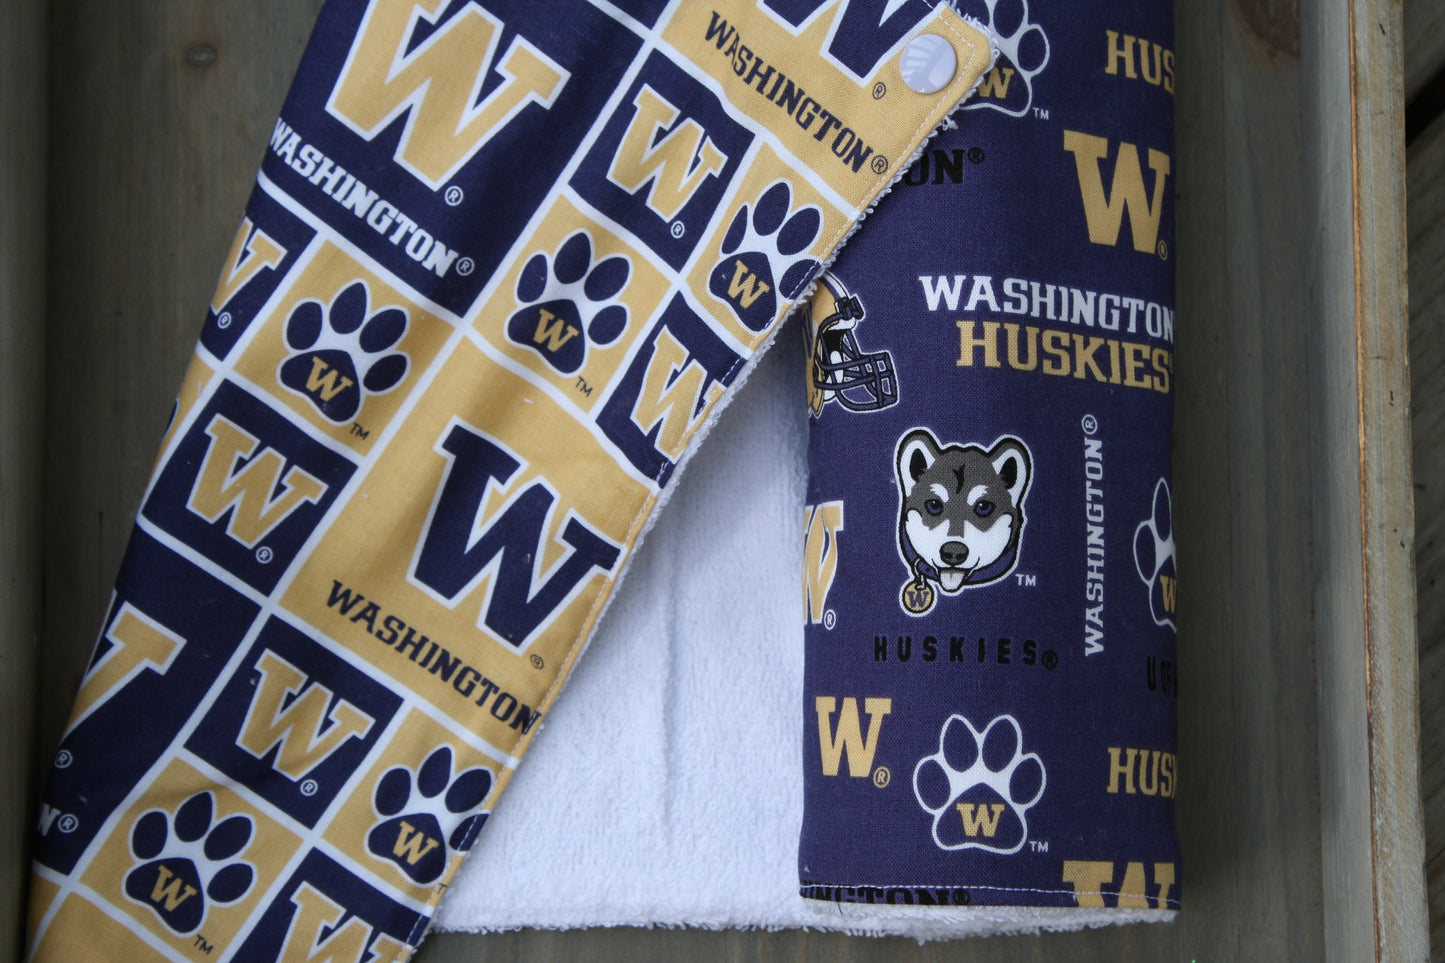 Washington Huskies snap together towel set